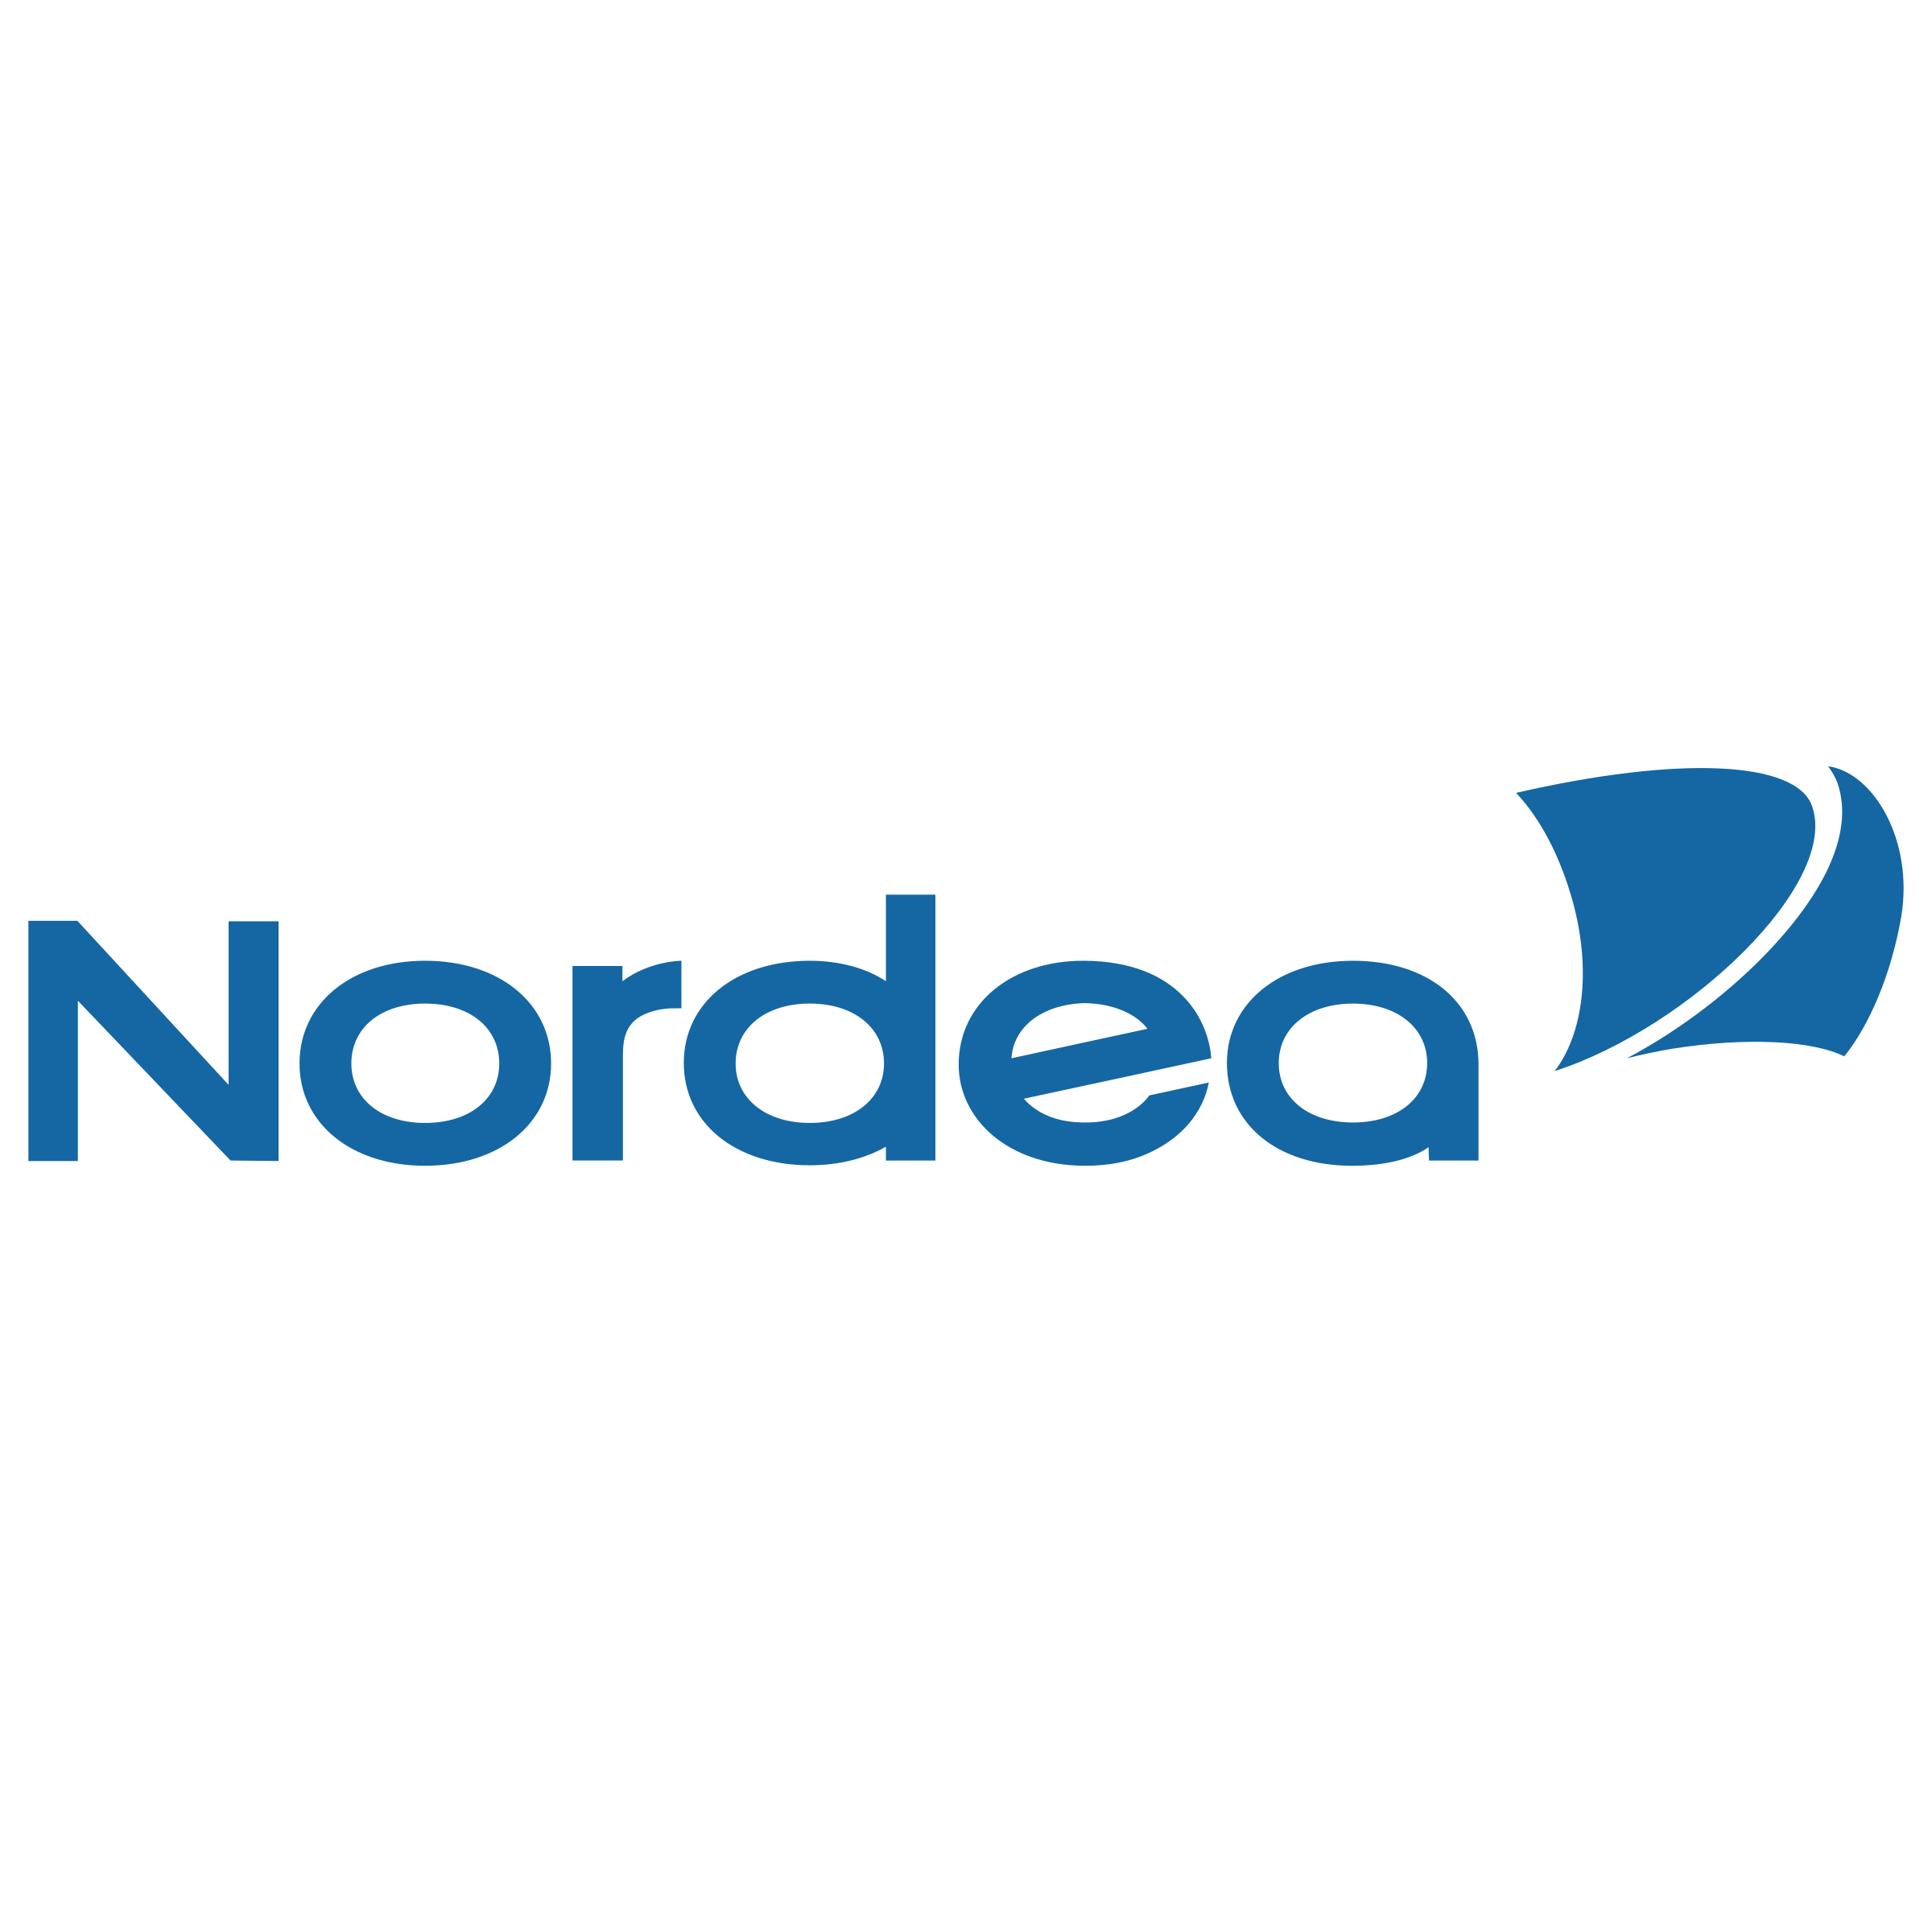 Nordea Logo - Nordea Logo PNG Transparent & SVG Vector